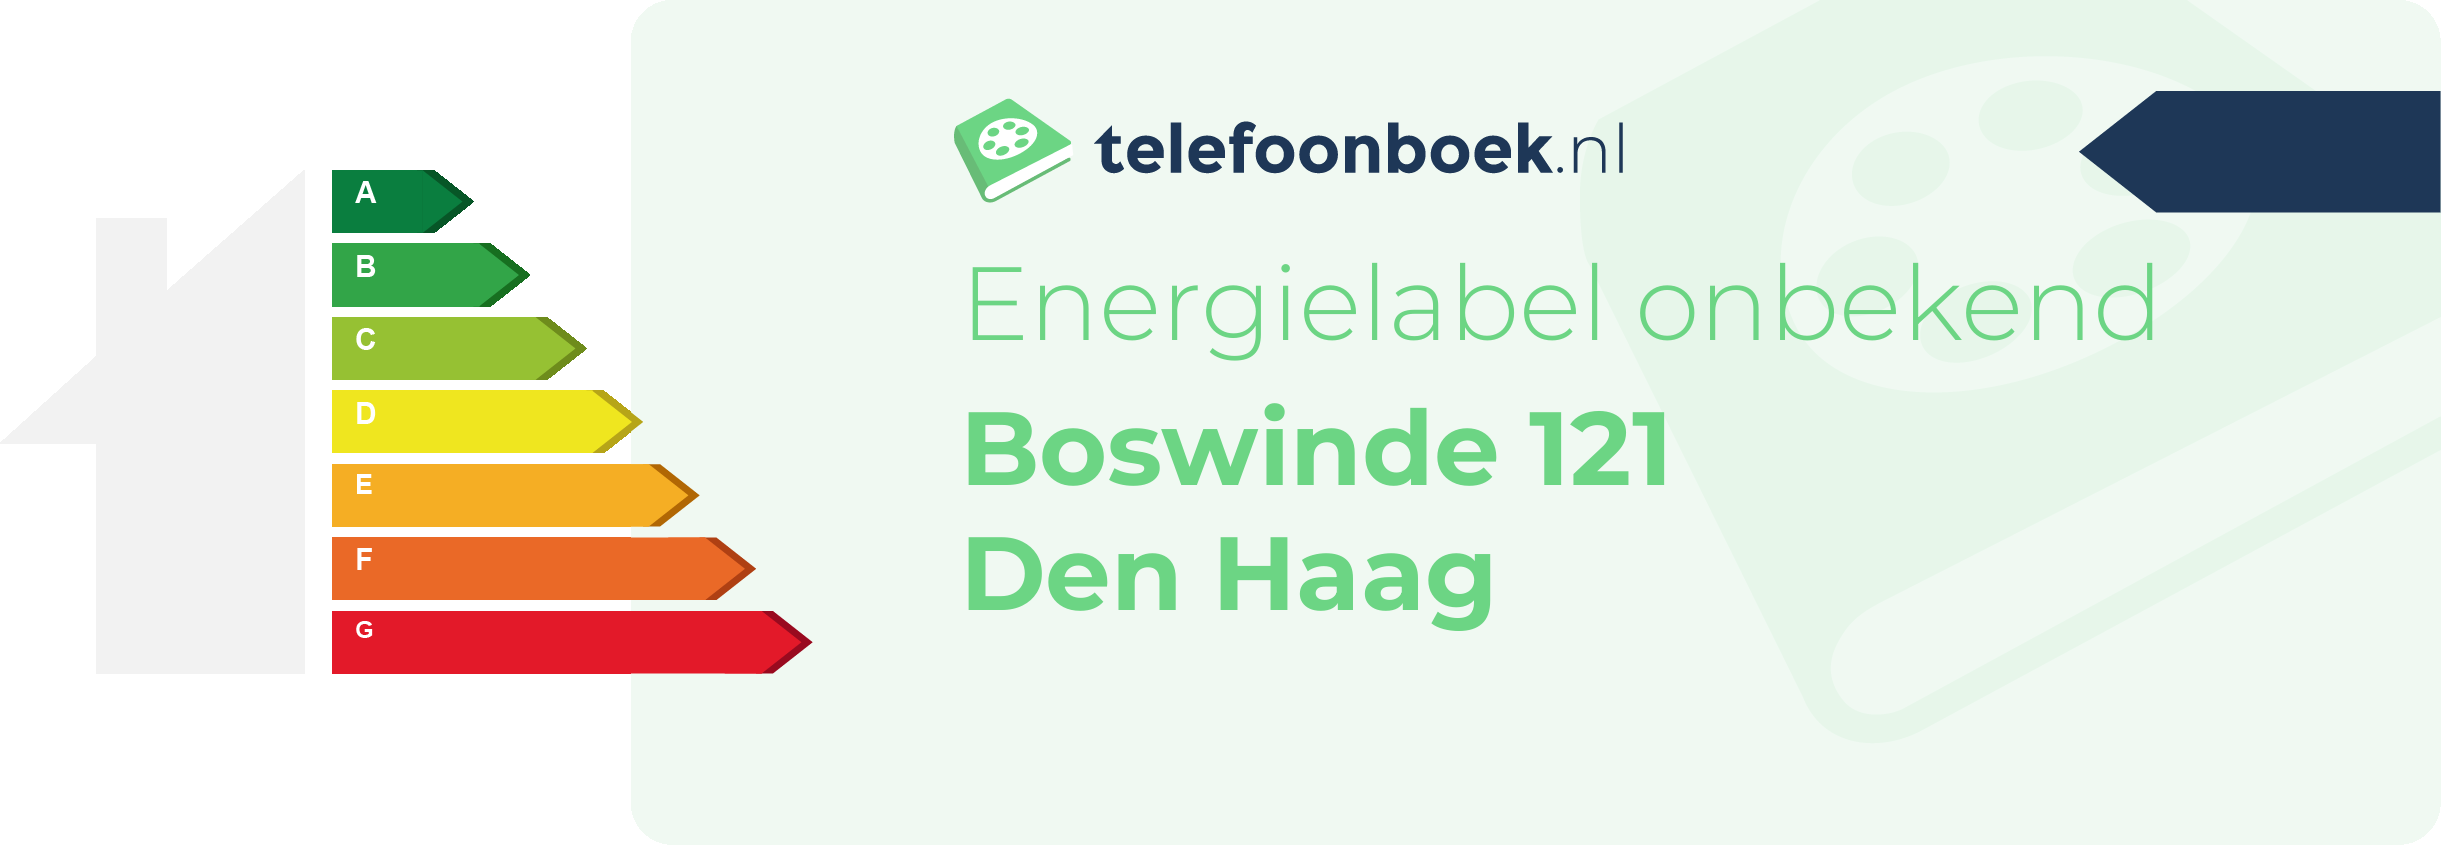 Energielabel Boswinde 121 Den Haag